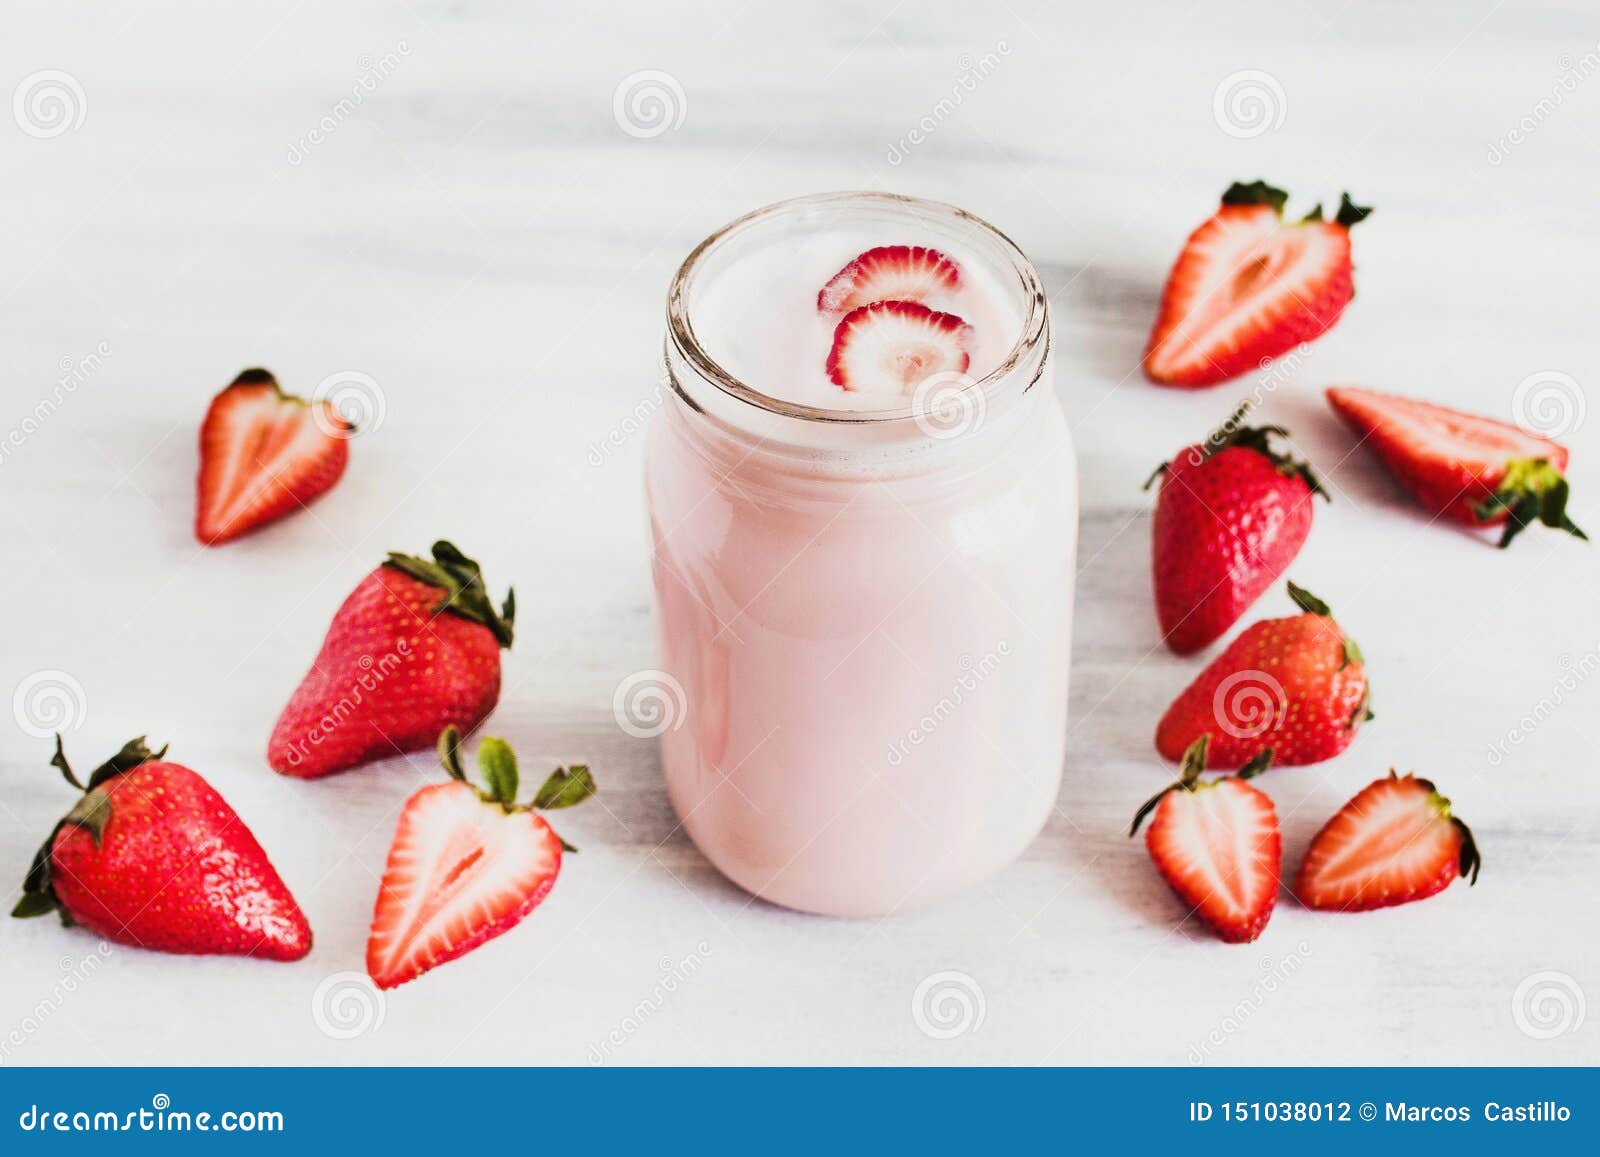 strawberry milkshake in the glass jar white background